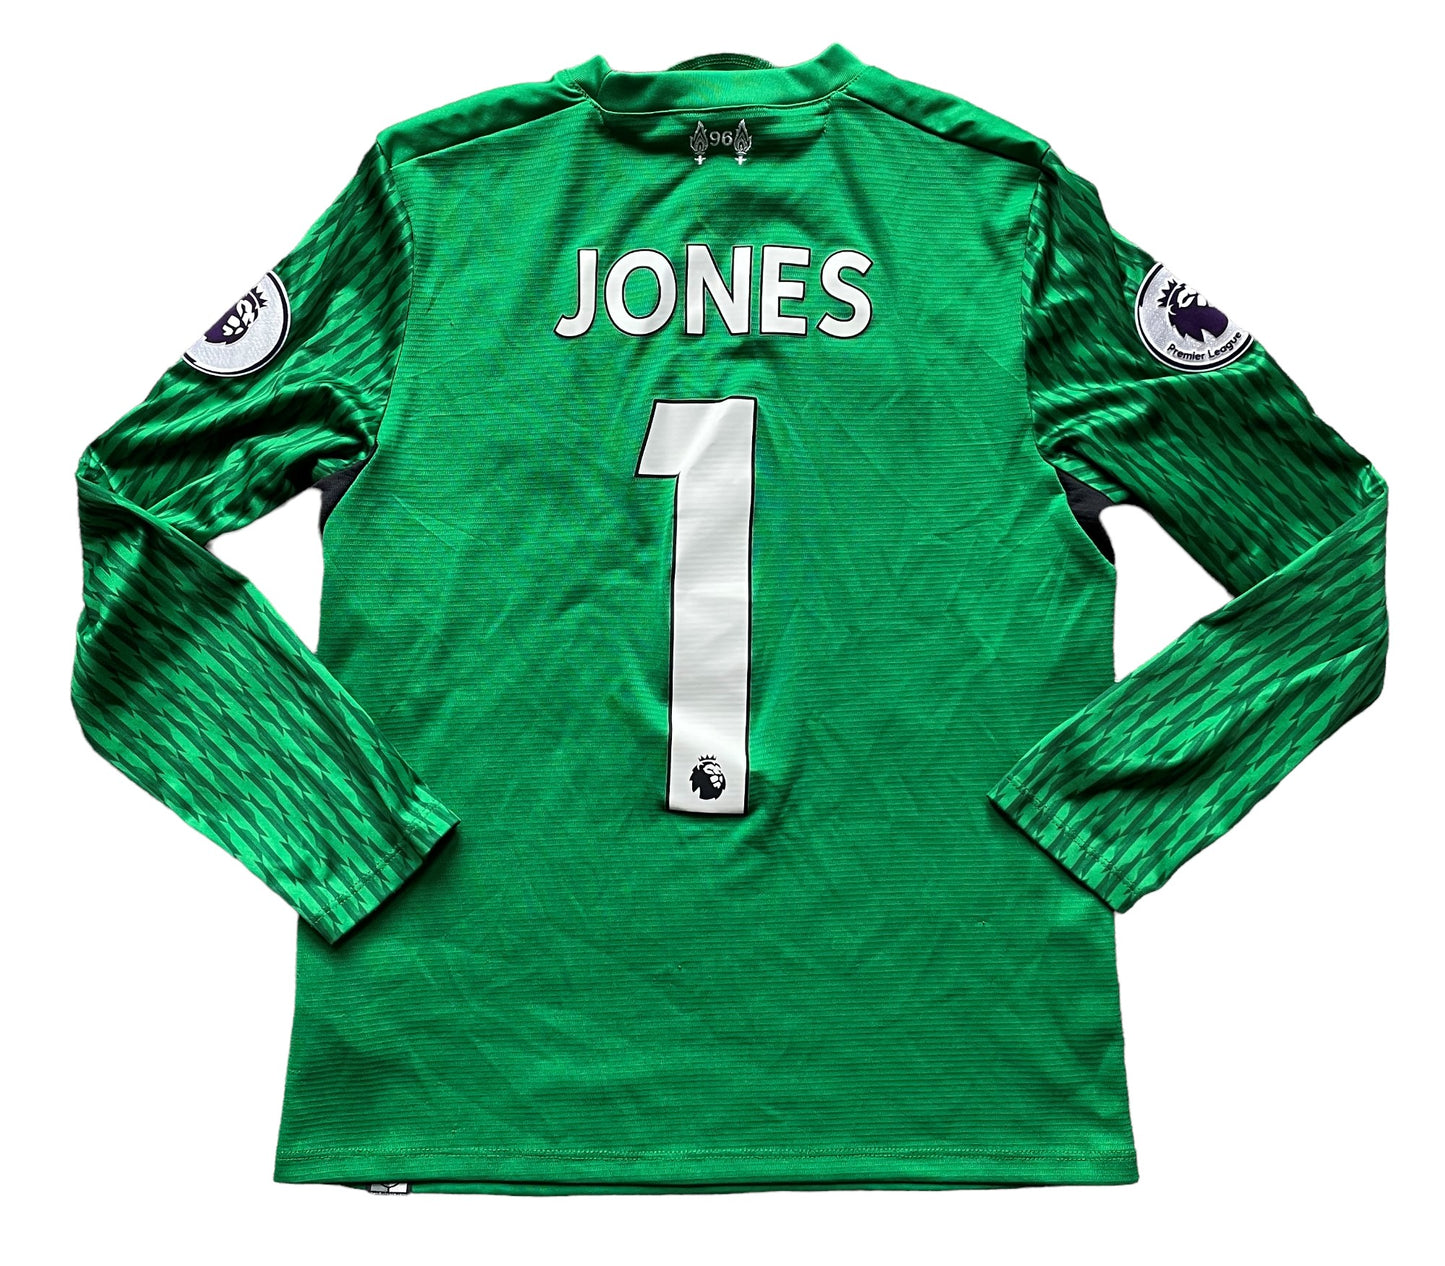 Liverpool Goalkeeper Shirt 2017/18 JONES 1 (excellent) Adults XXS/Medium Boys. Height 21.5 inches